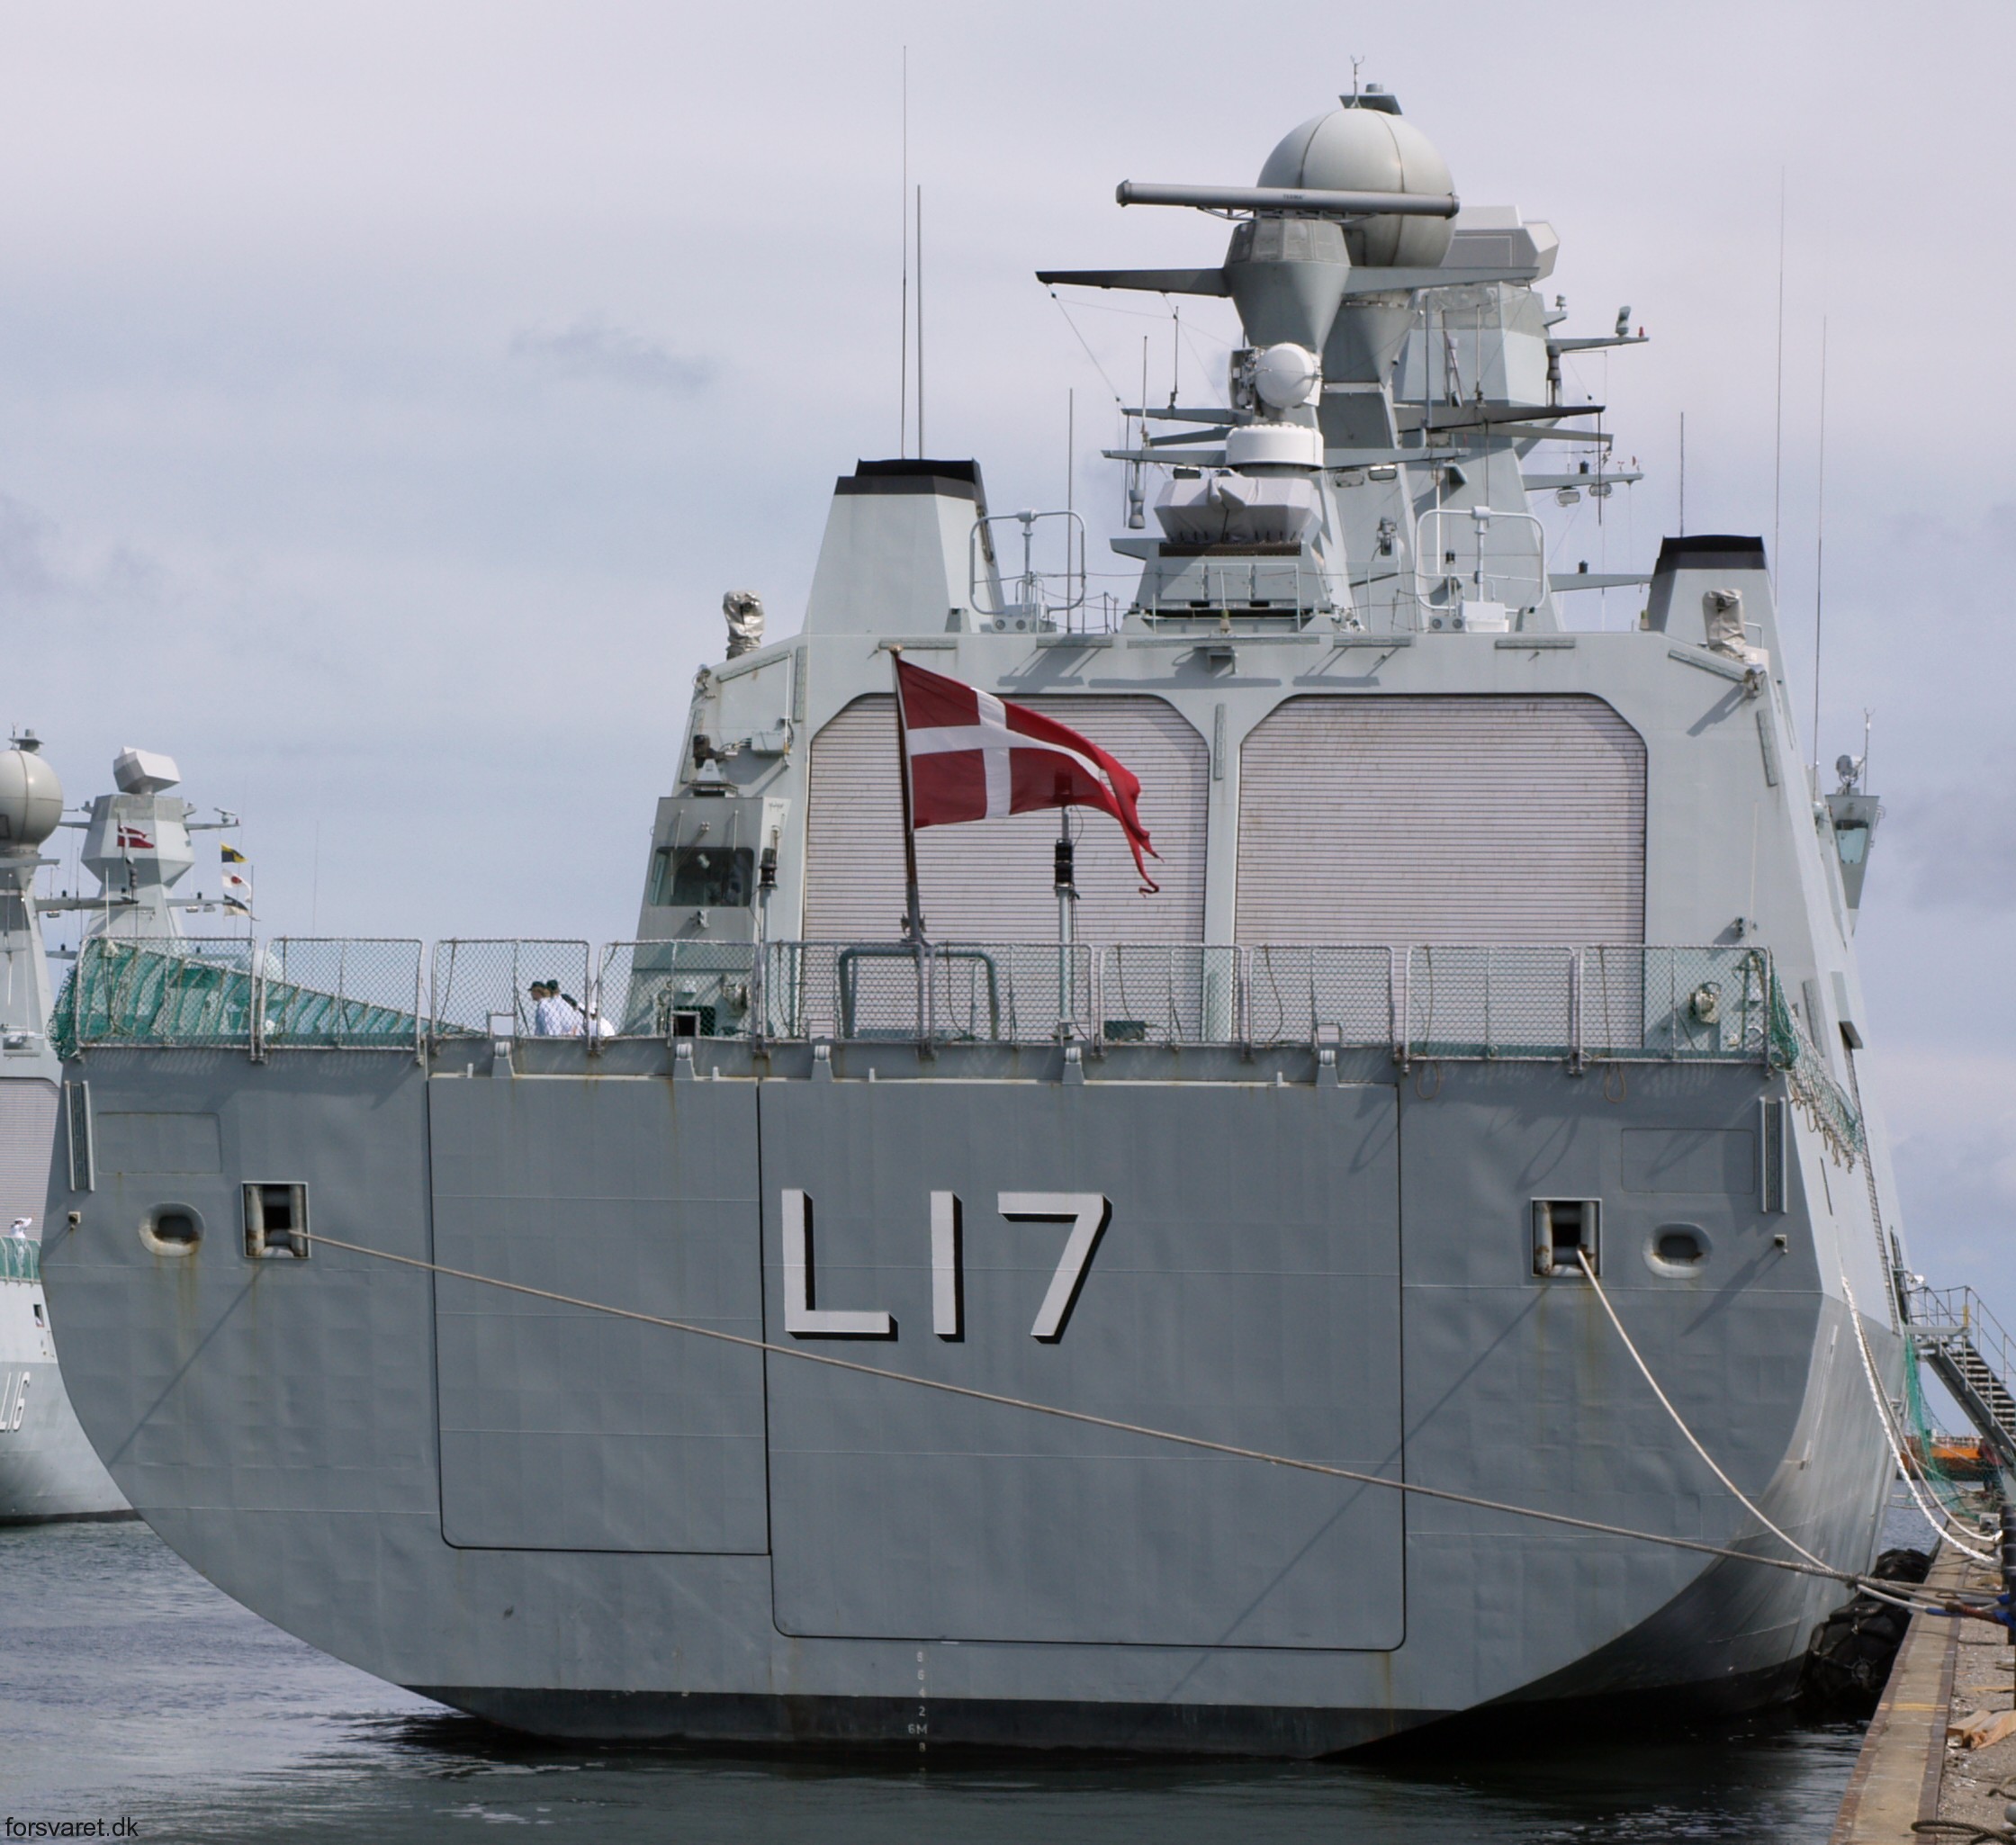 f-342 hdms esbern snare l-17 frigate command support ship royal danish navy 02